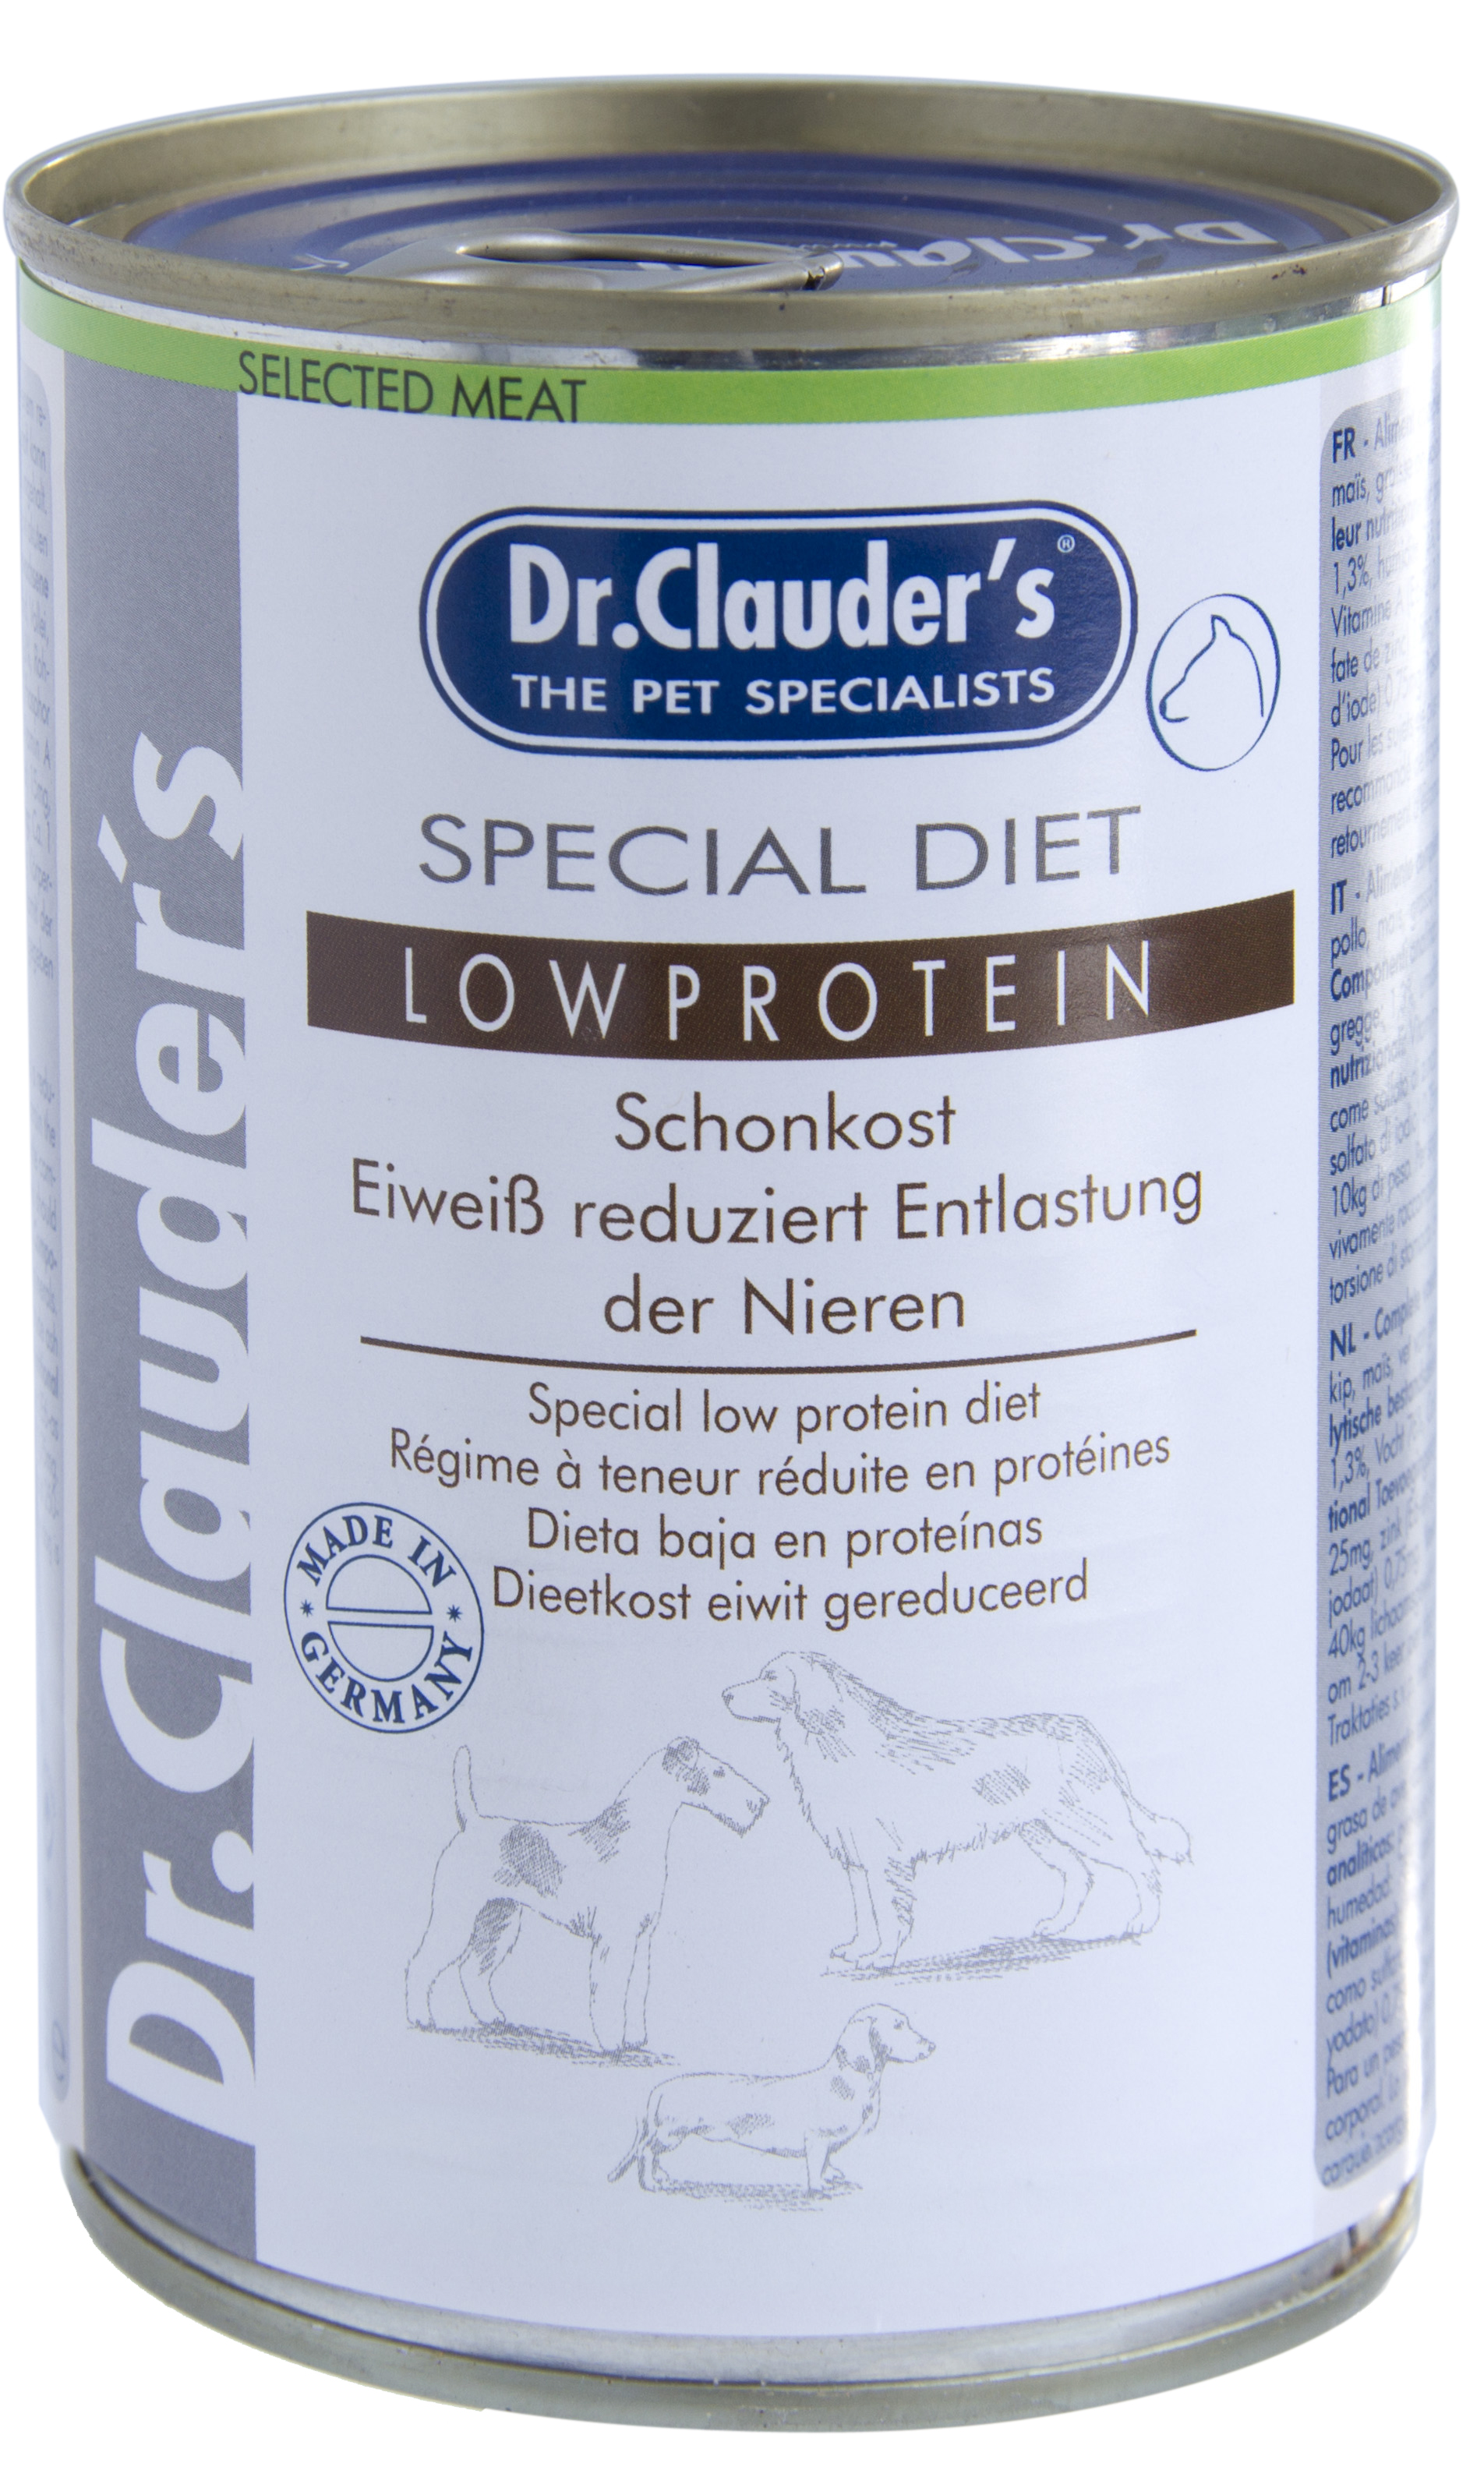 Dr.Clauder's Special Diet Low Protein